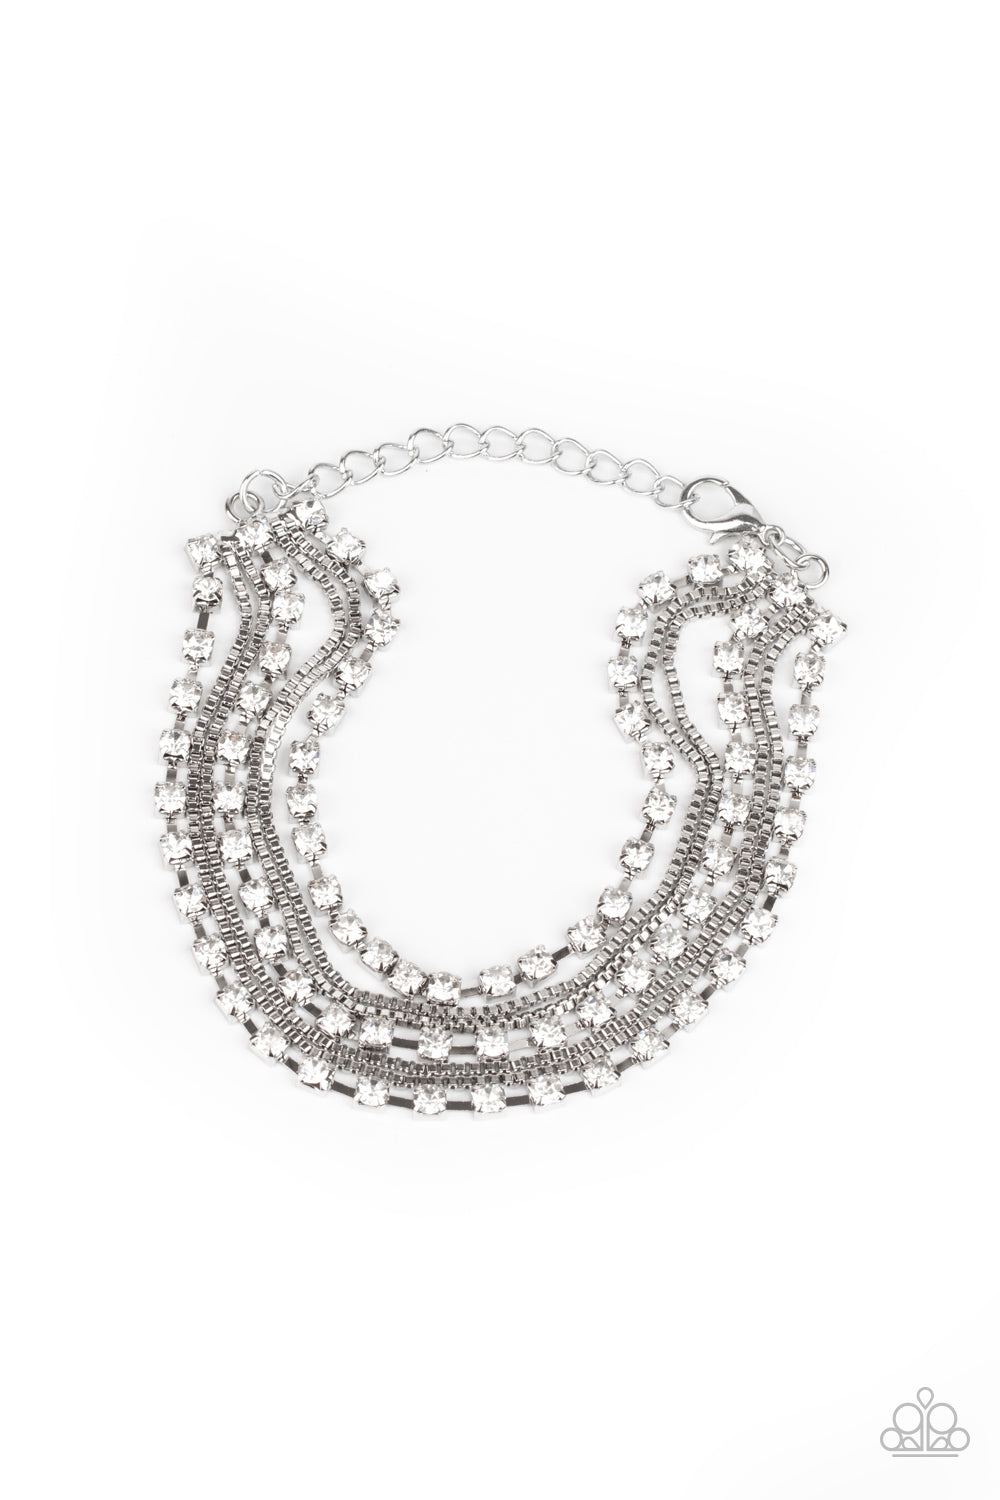 Paparazzi Thats a Smash! - White Rhinestone Bracelet - A Finishing Touch Jewelry